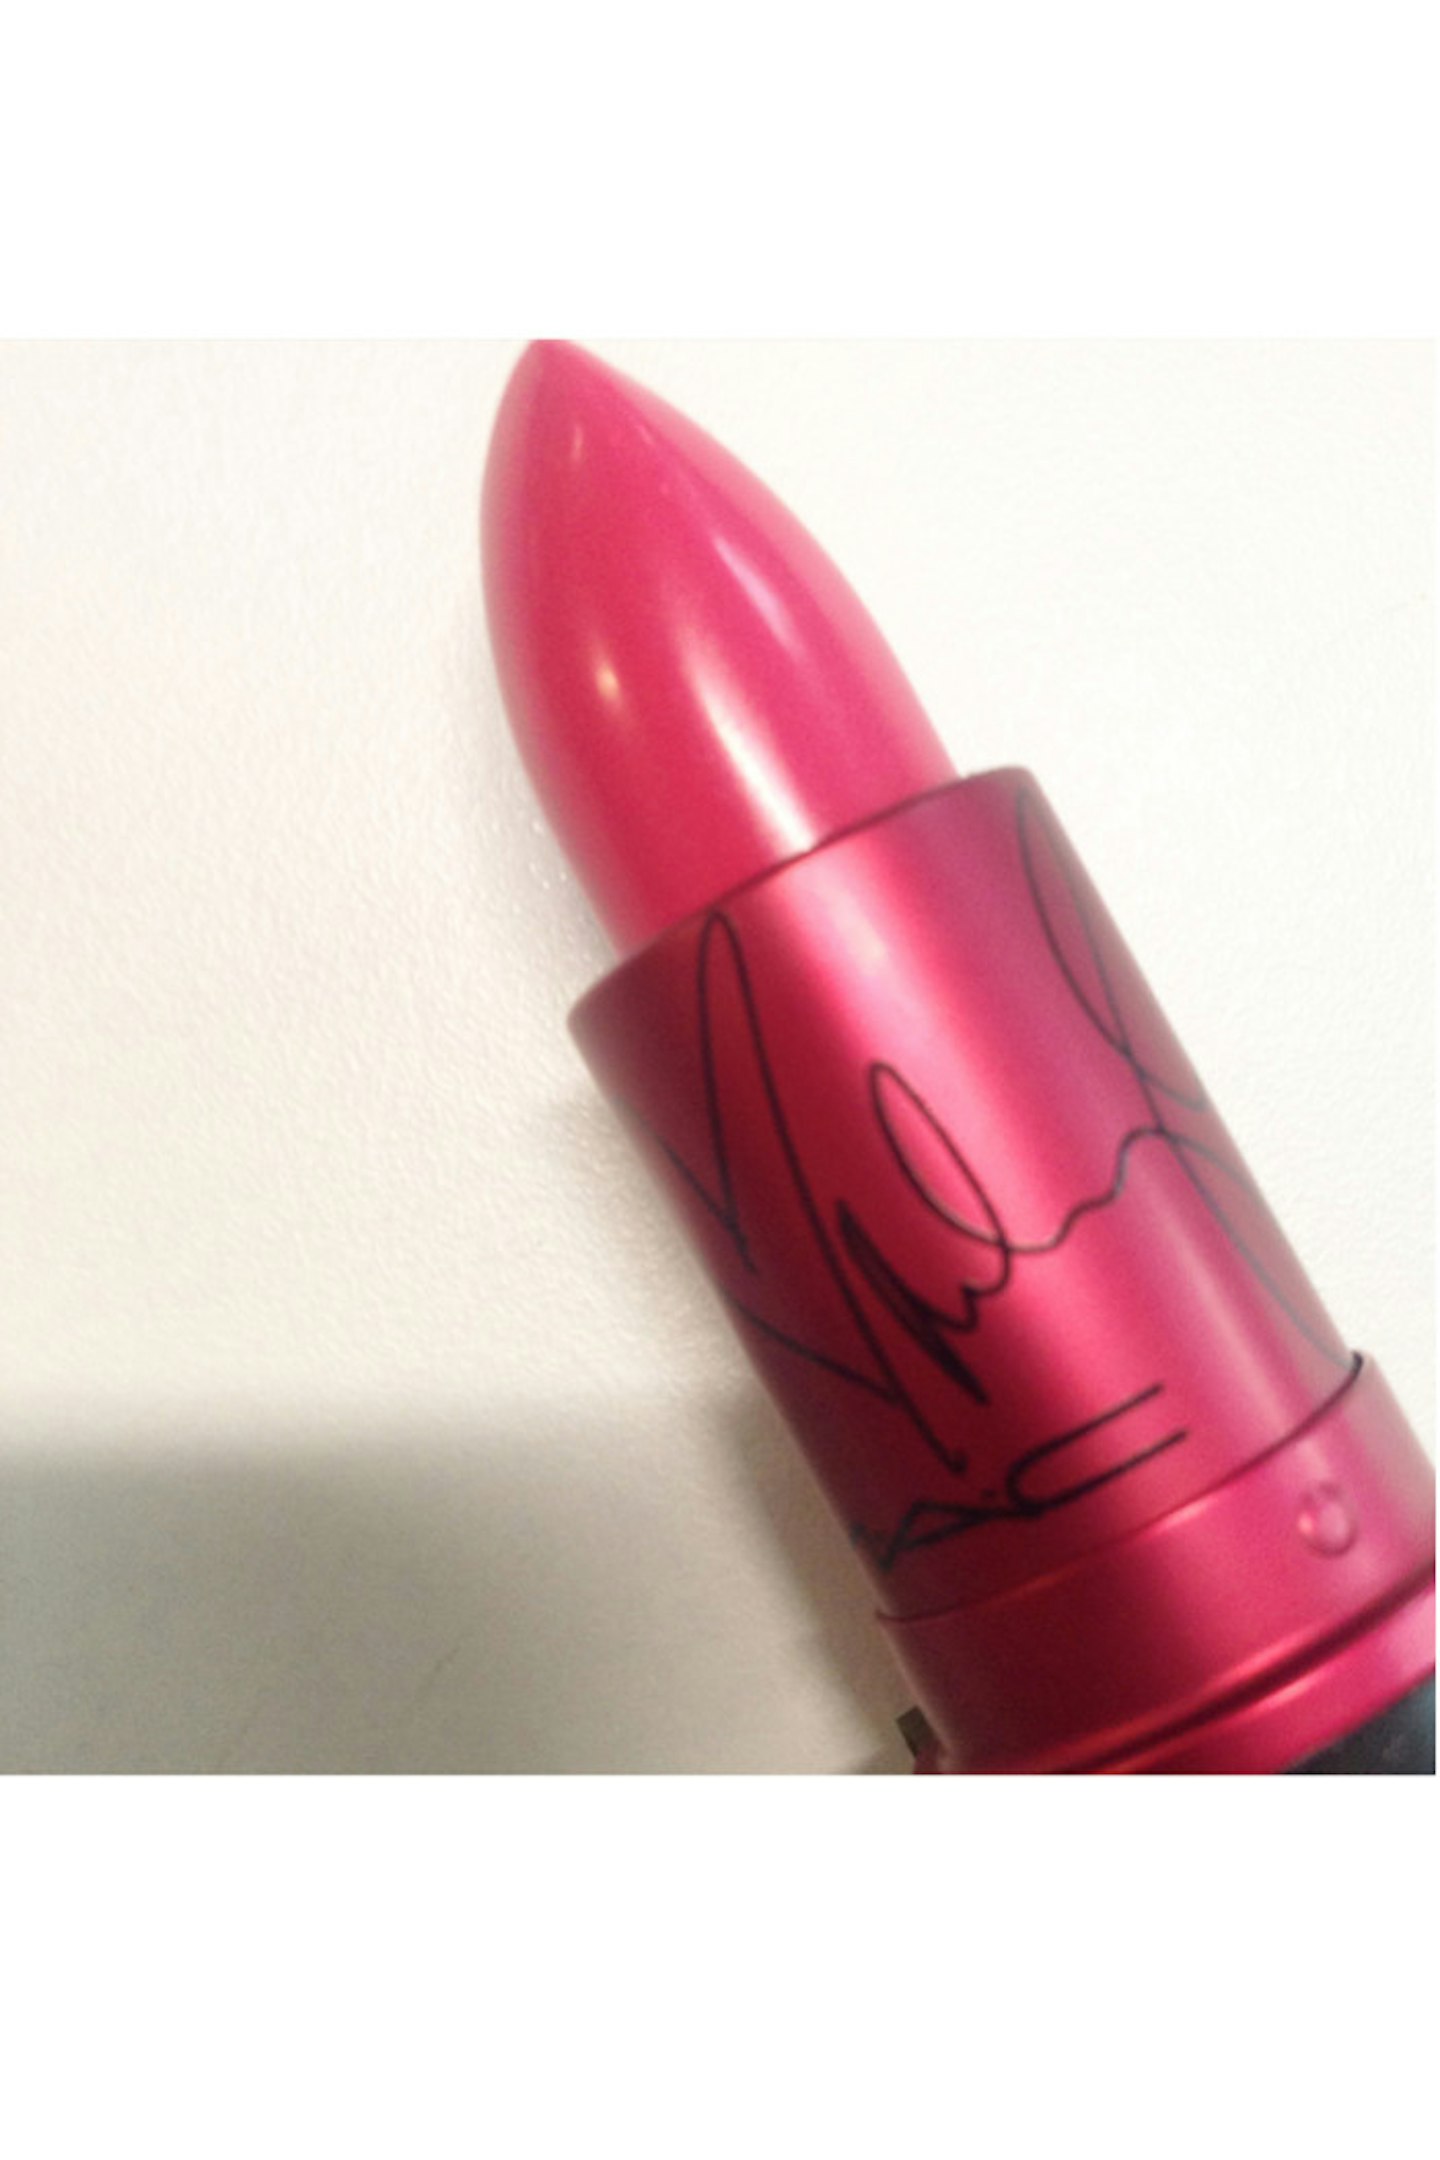 MAC Viva Glam x Miley Cyrus Lipstick, £15.50